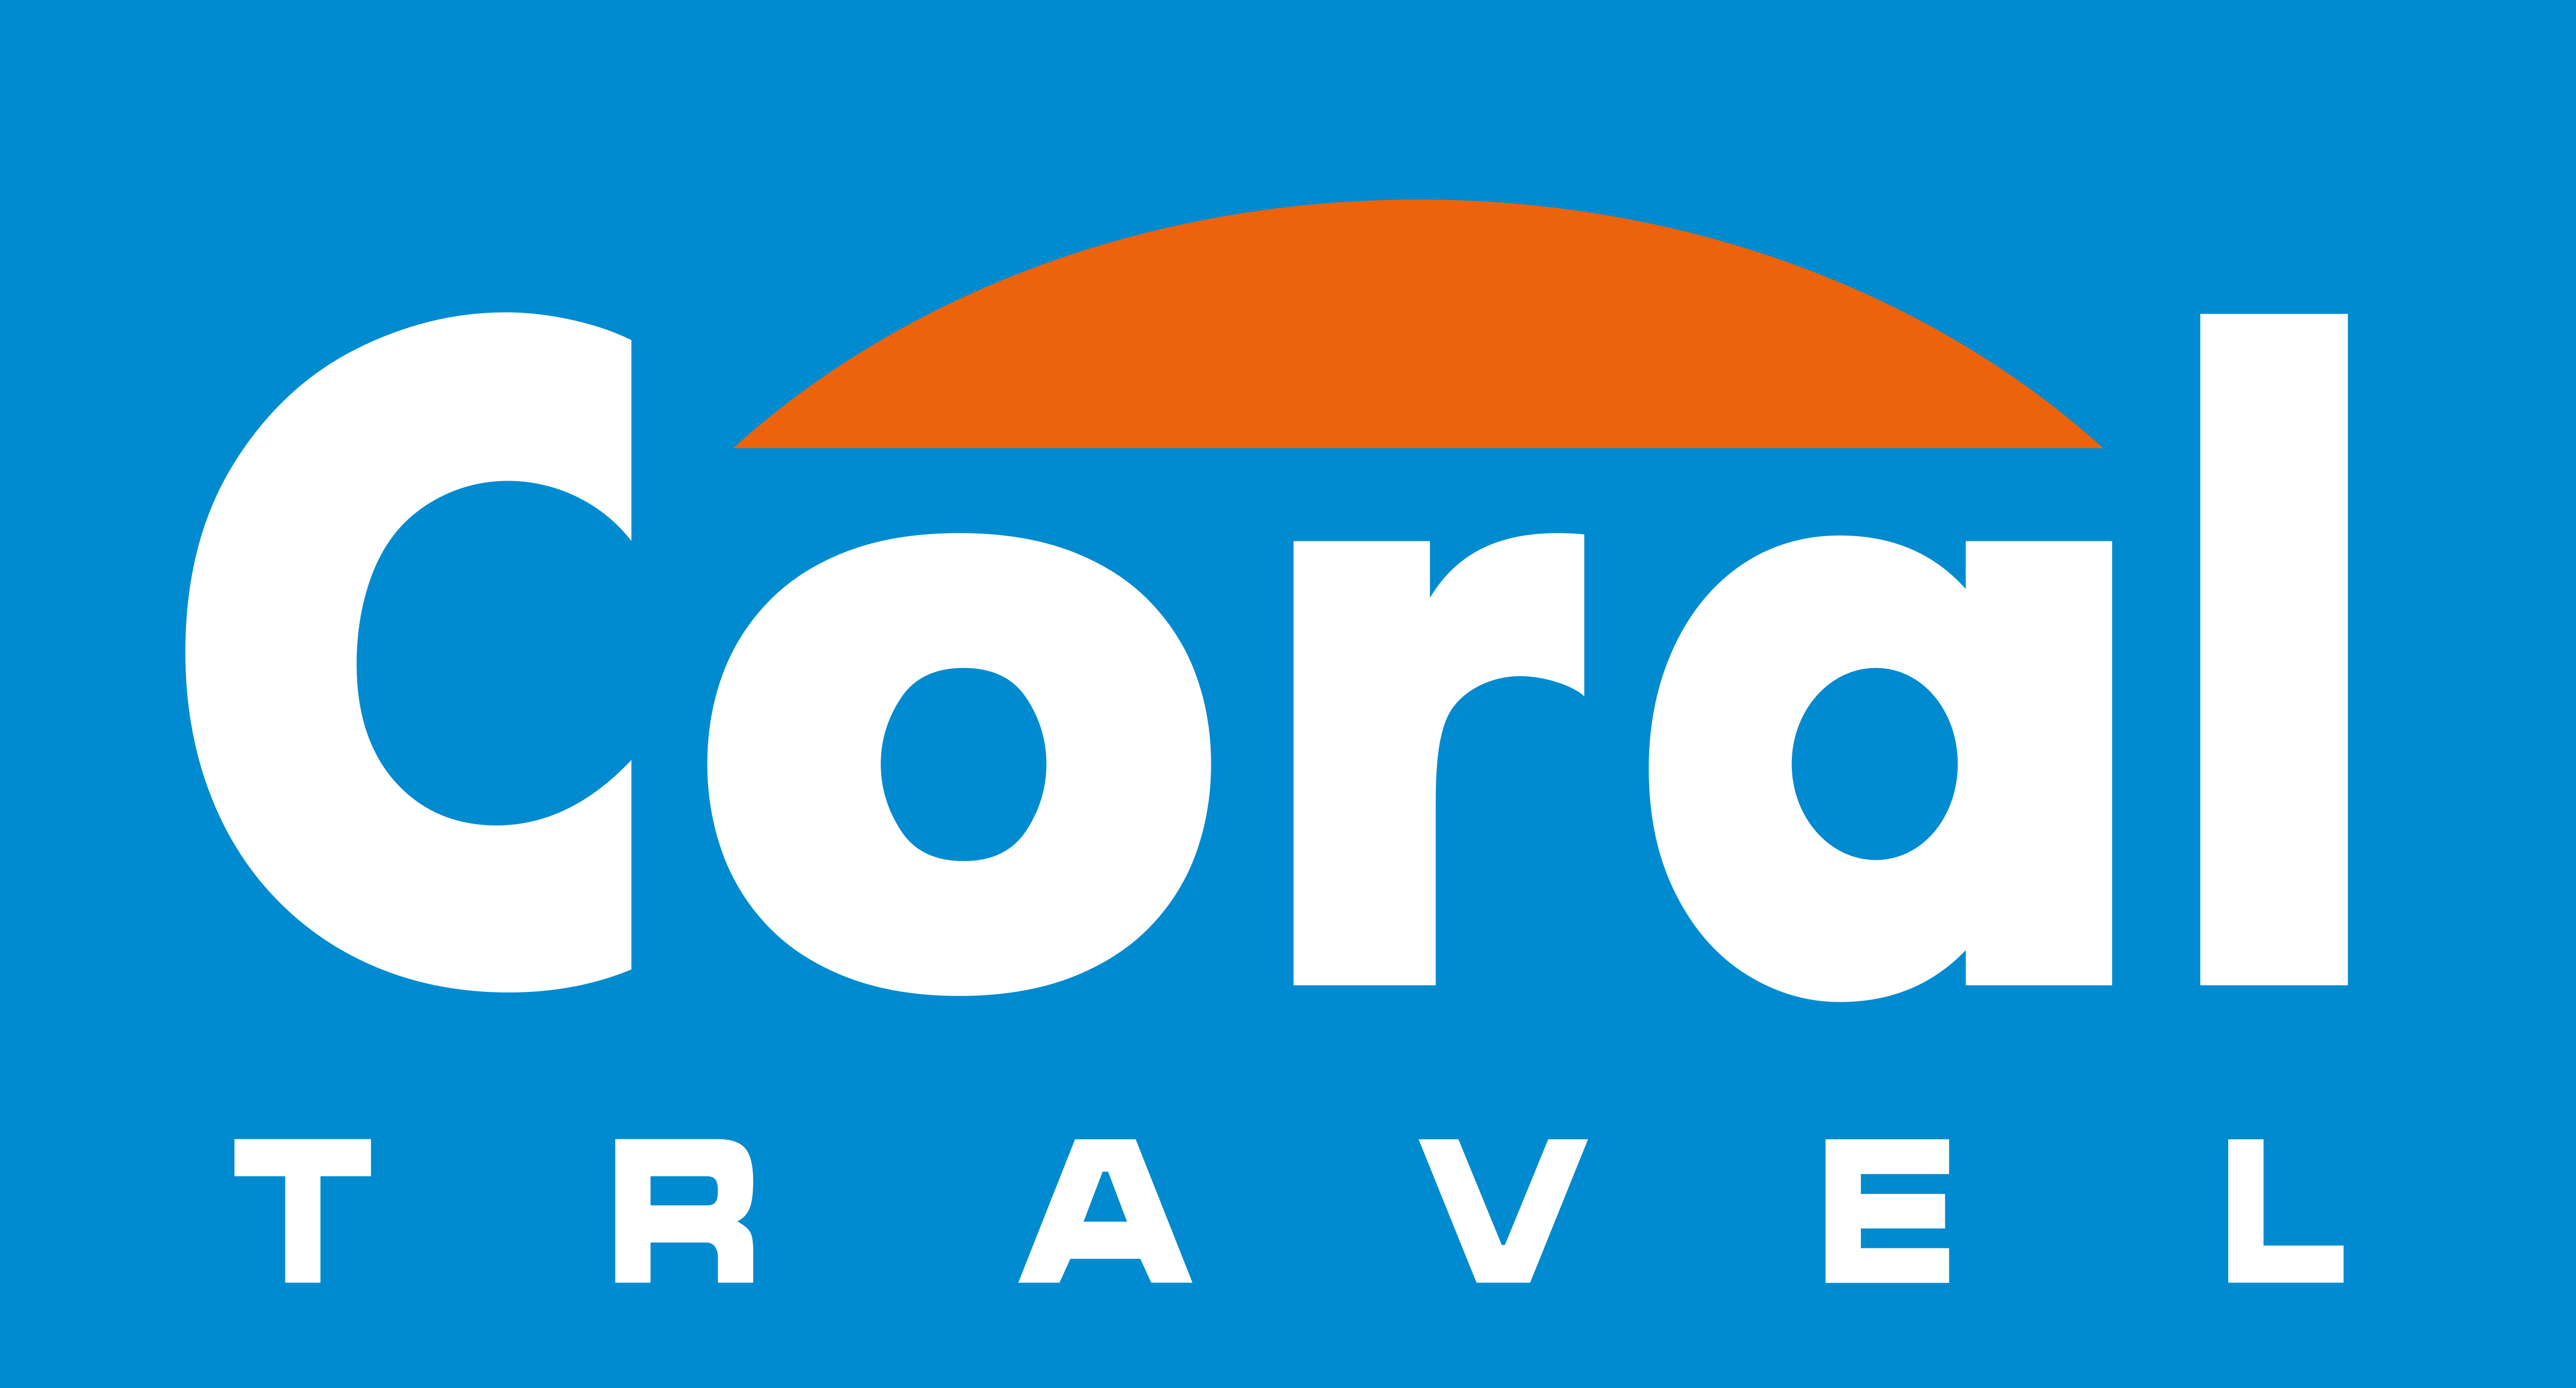 Coral личный кабинет. Корал логотип туроператор. Coral Travel логотип. Корал Тревел турагентство логотип. Туристическая фирма “Coral Travel”..